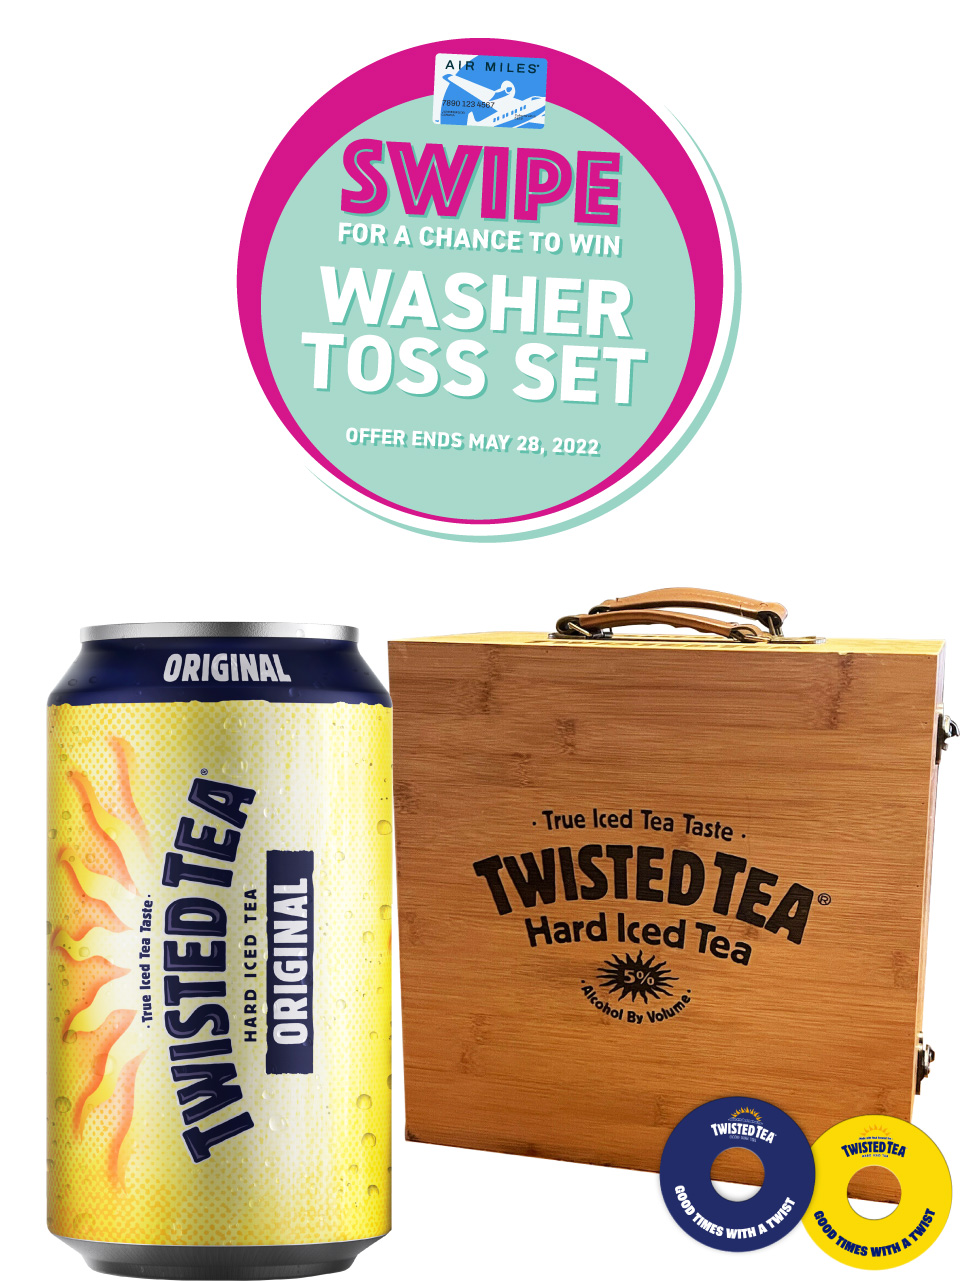 Twisted Tea Hard Iced Tea Original 6 Pack Cans